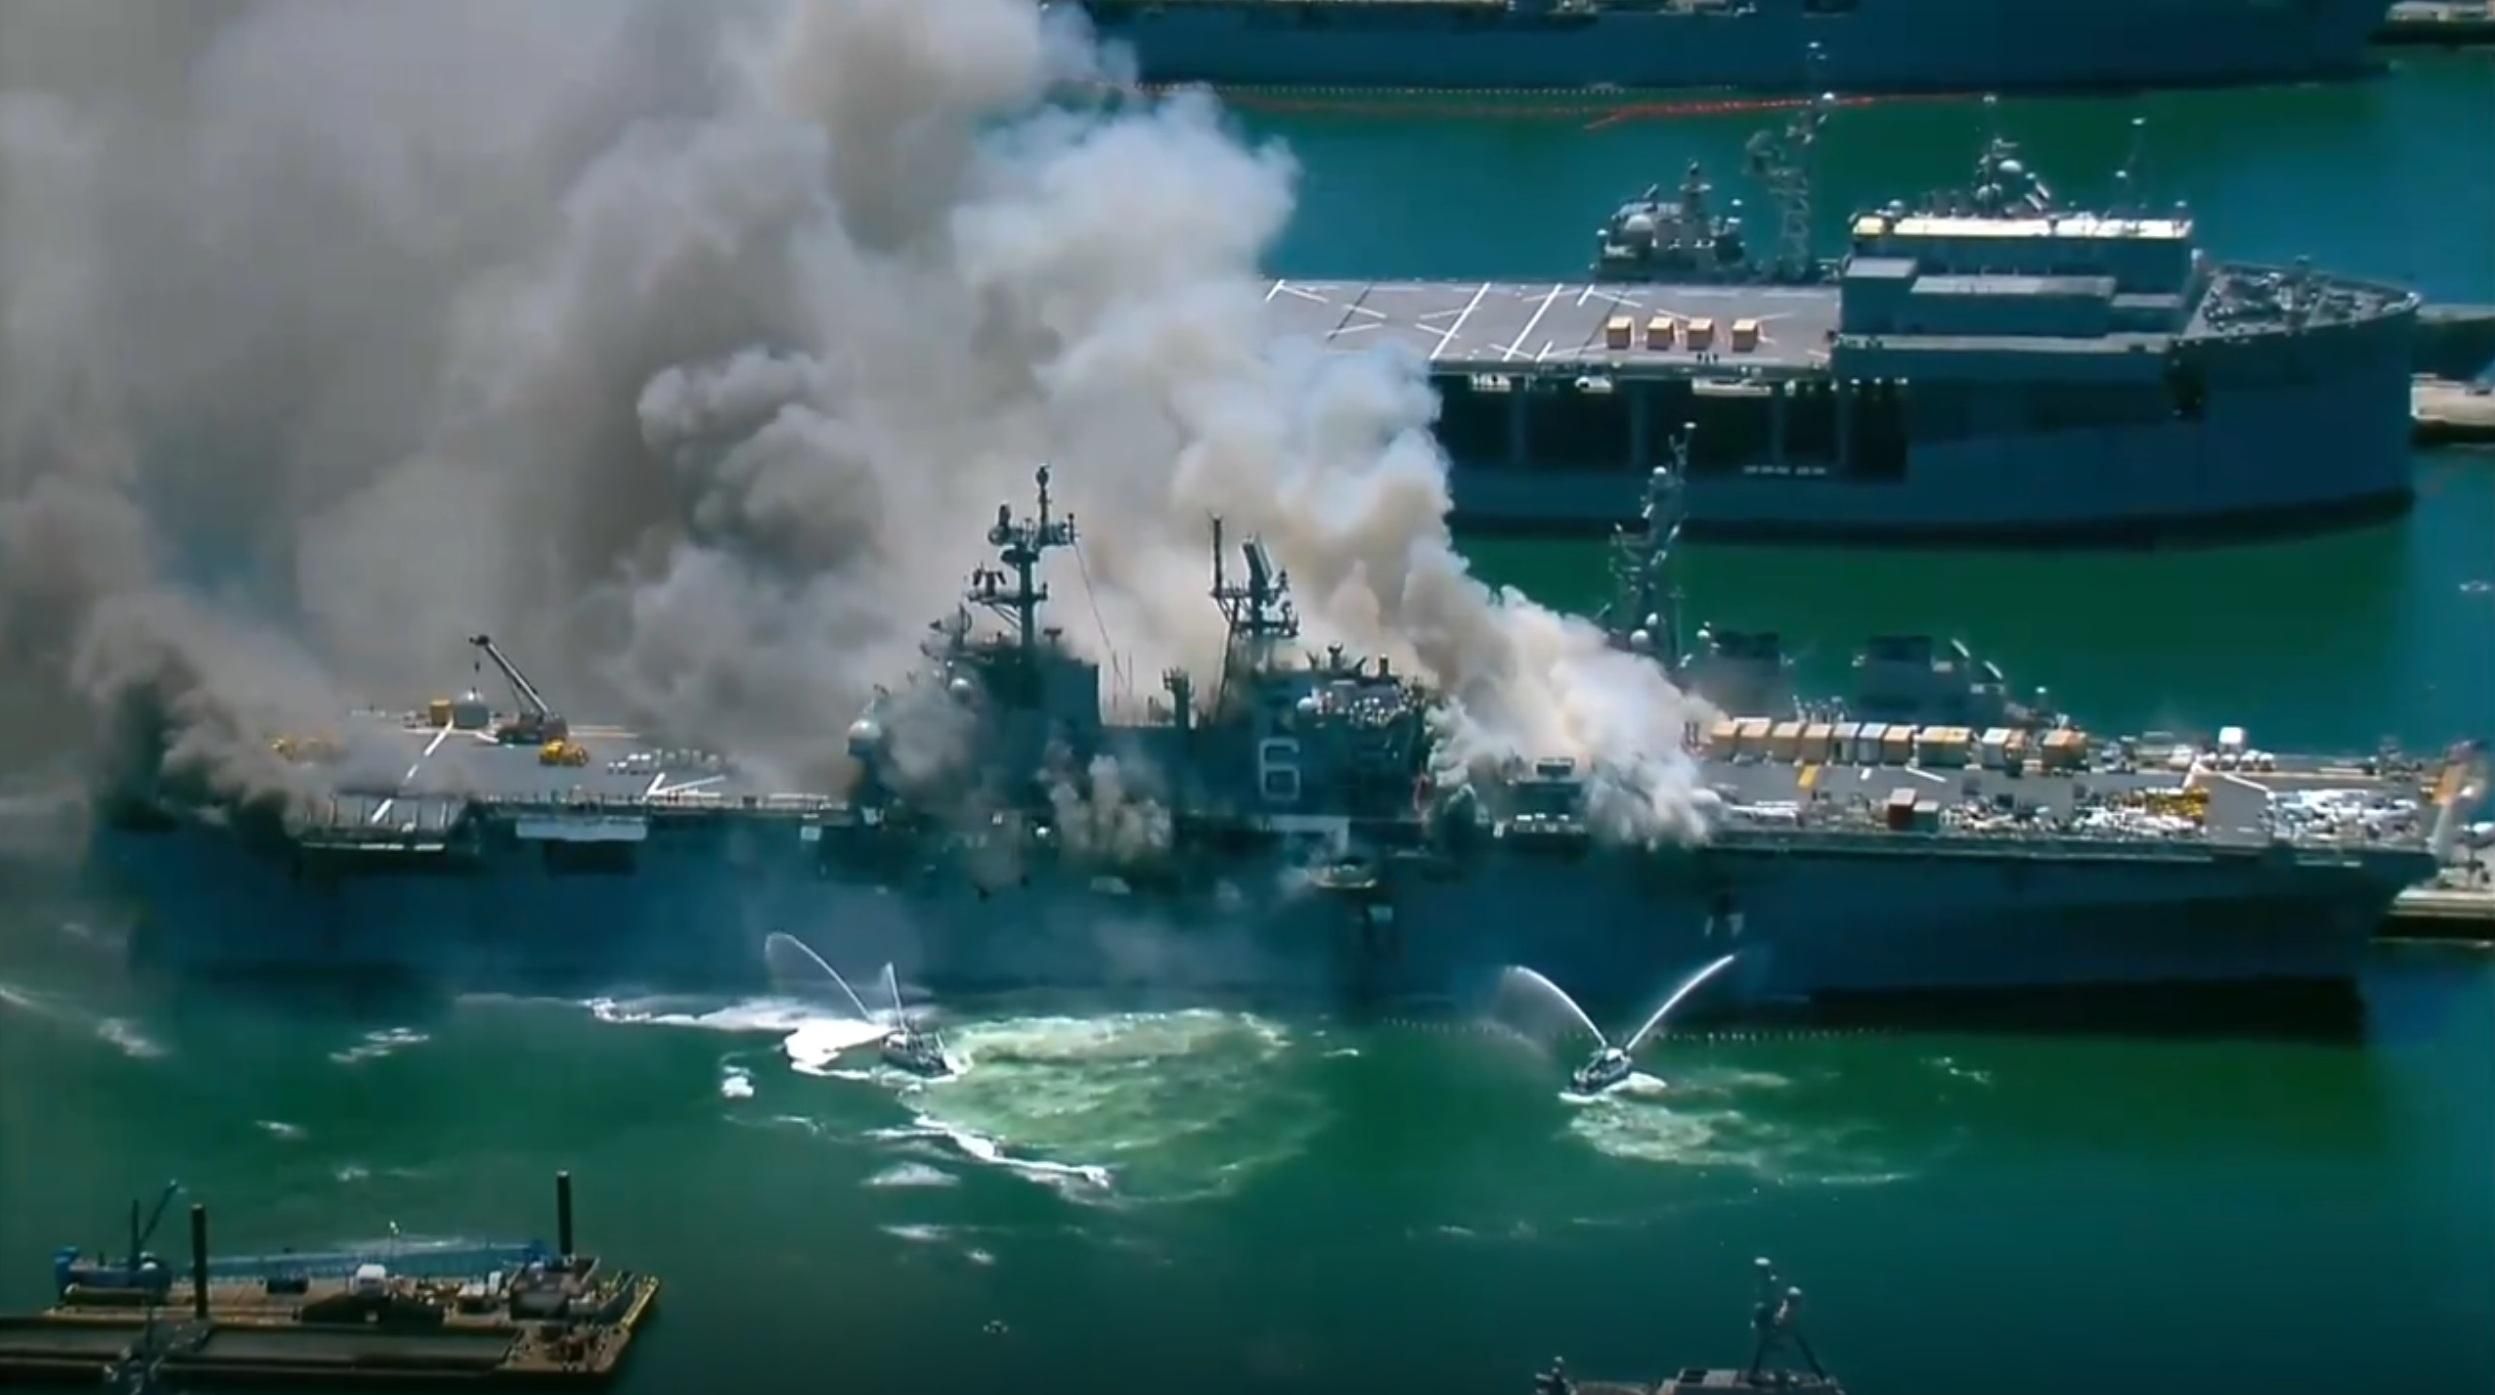 USS Bonhomme Richard в США загорелся и взорвался